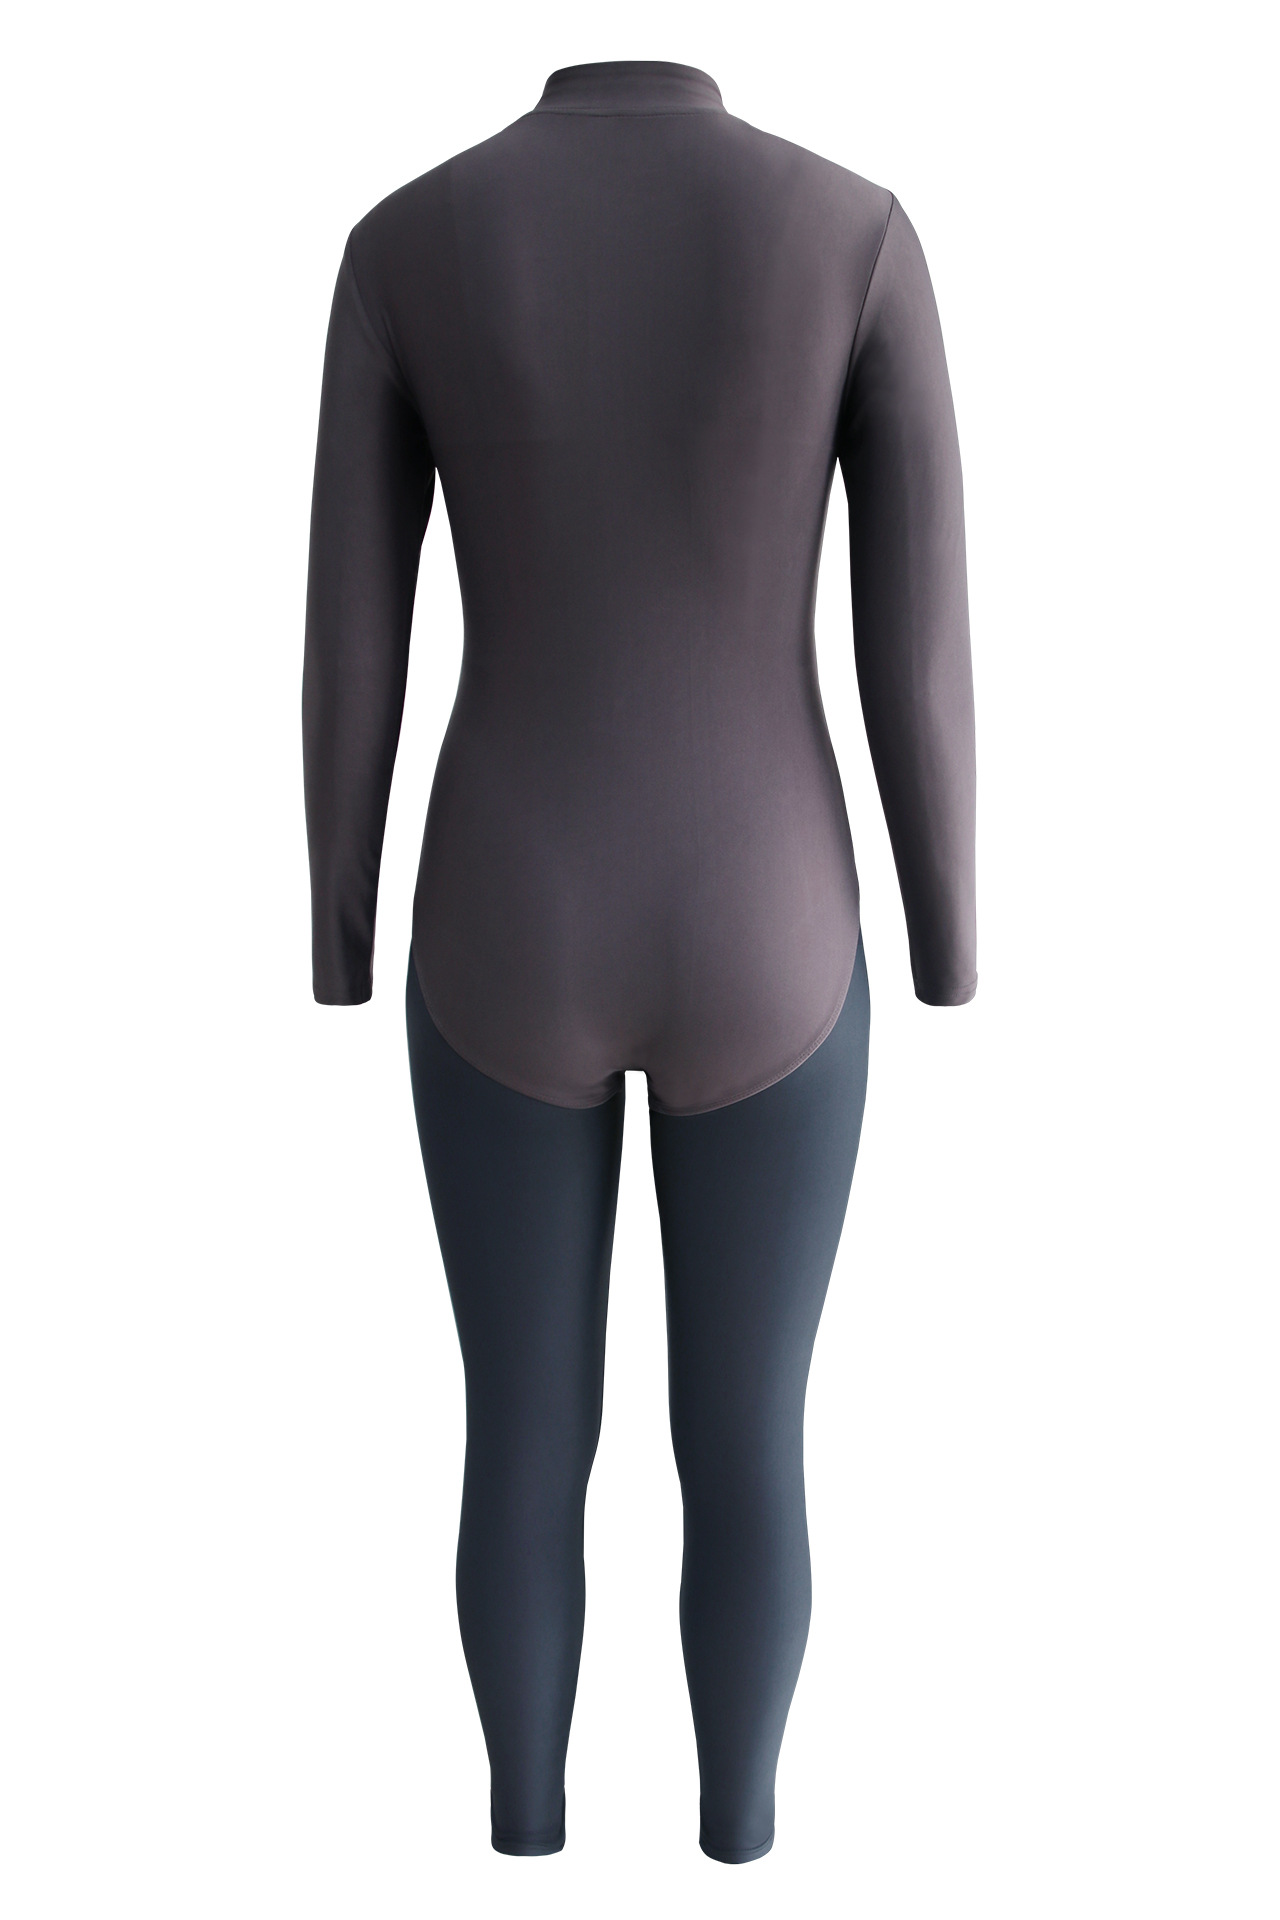 4POSE Women's Full Body Burkini Hijab 2-Piece Swimsuit Set Black Grey